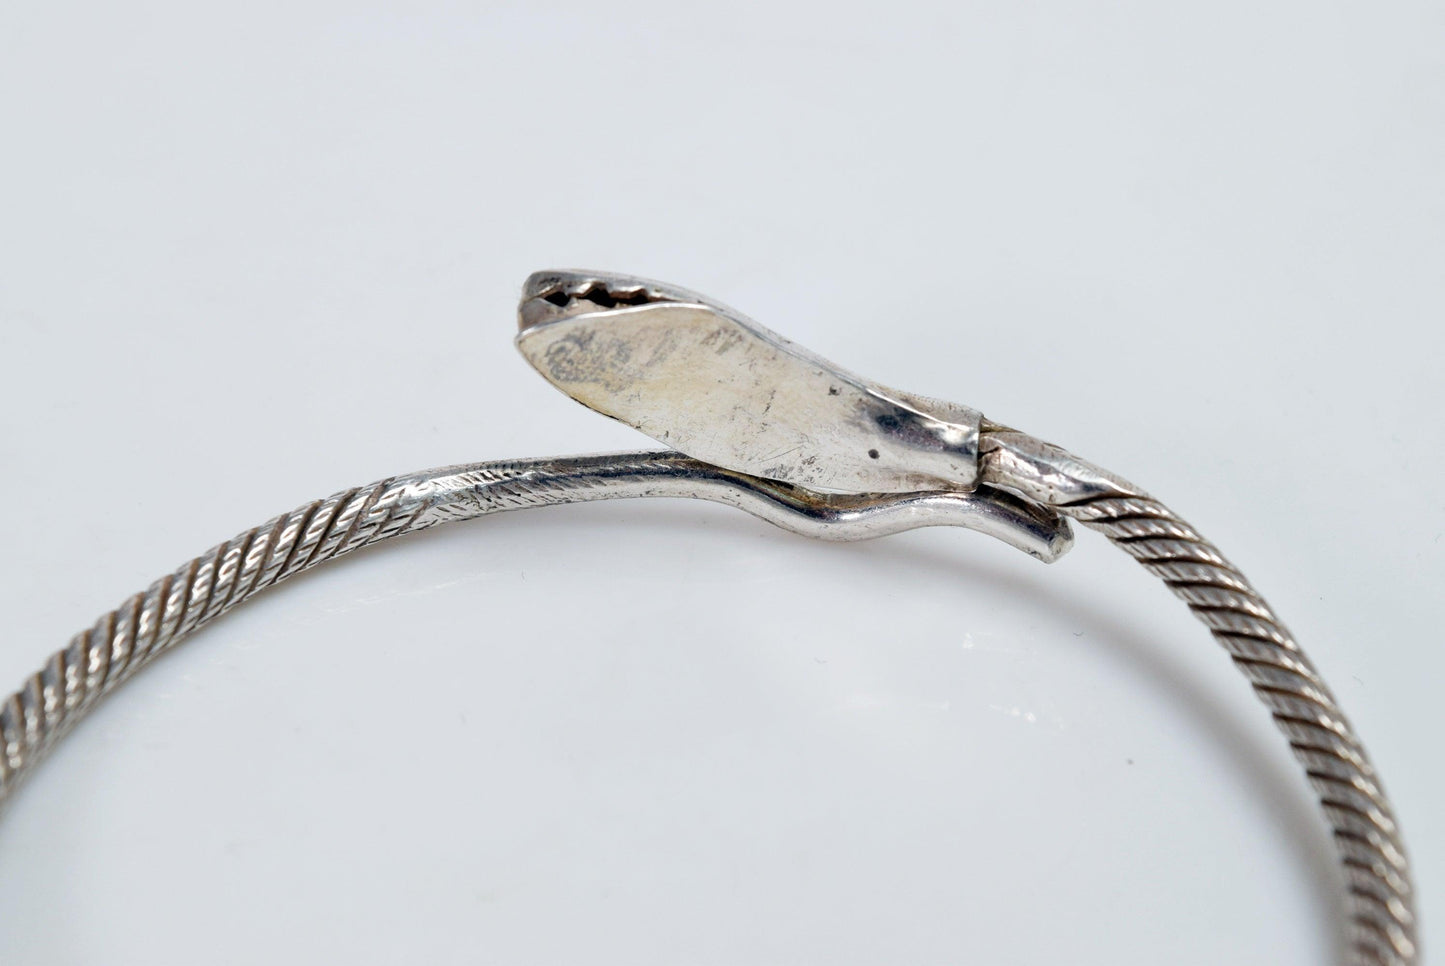 Vintage Silver Egyptian Snake Bracelet or Bangle - Anteeka